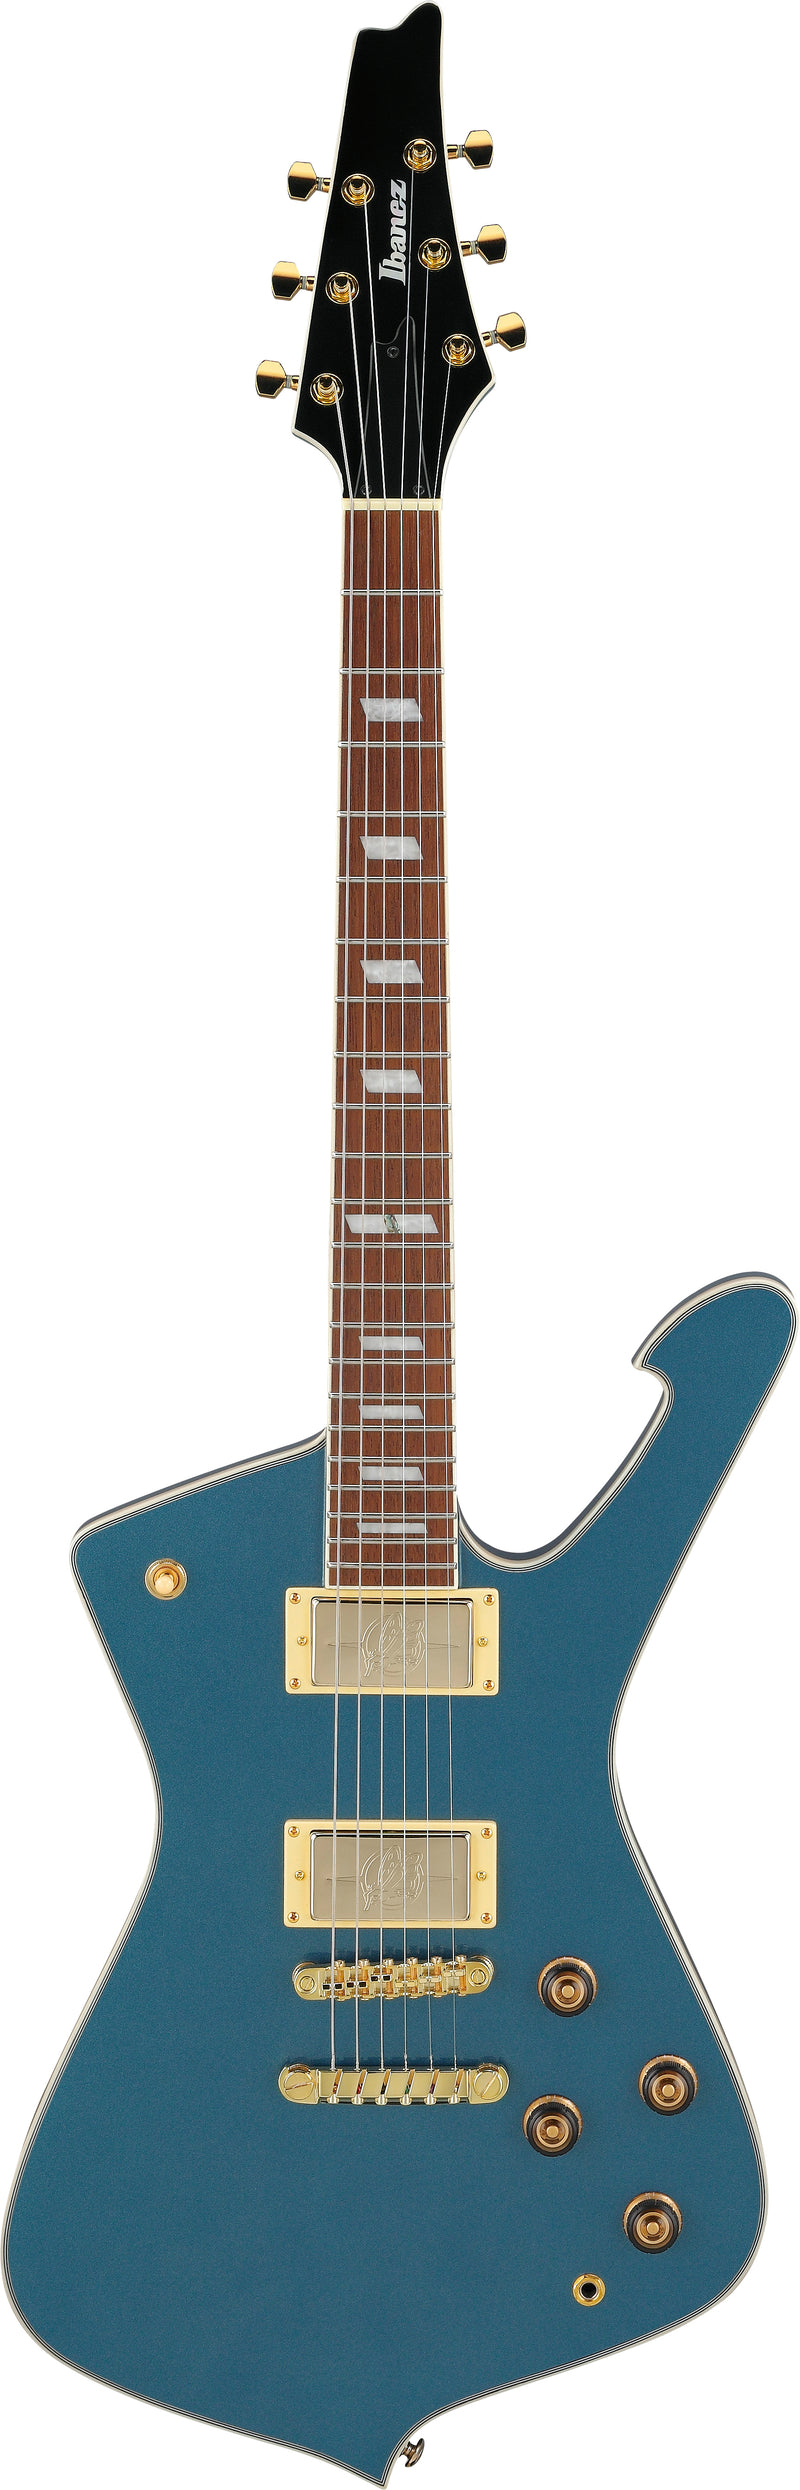 Ibanez ICEMAN Series Electric Guitar (Antique Blue Metallic)